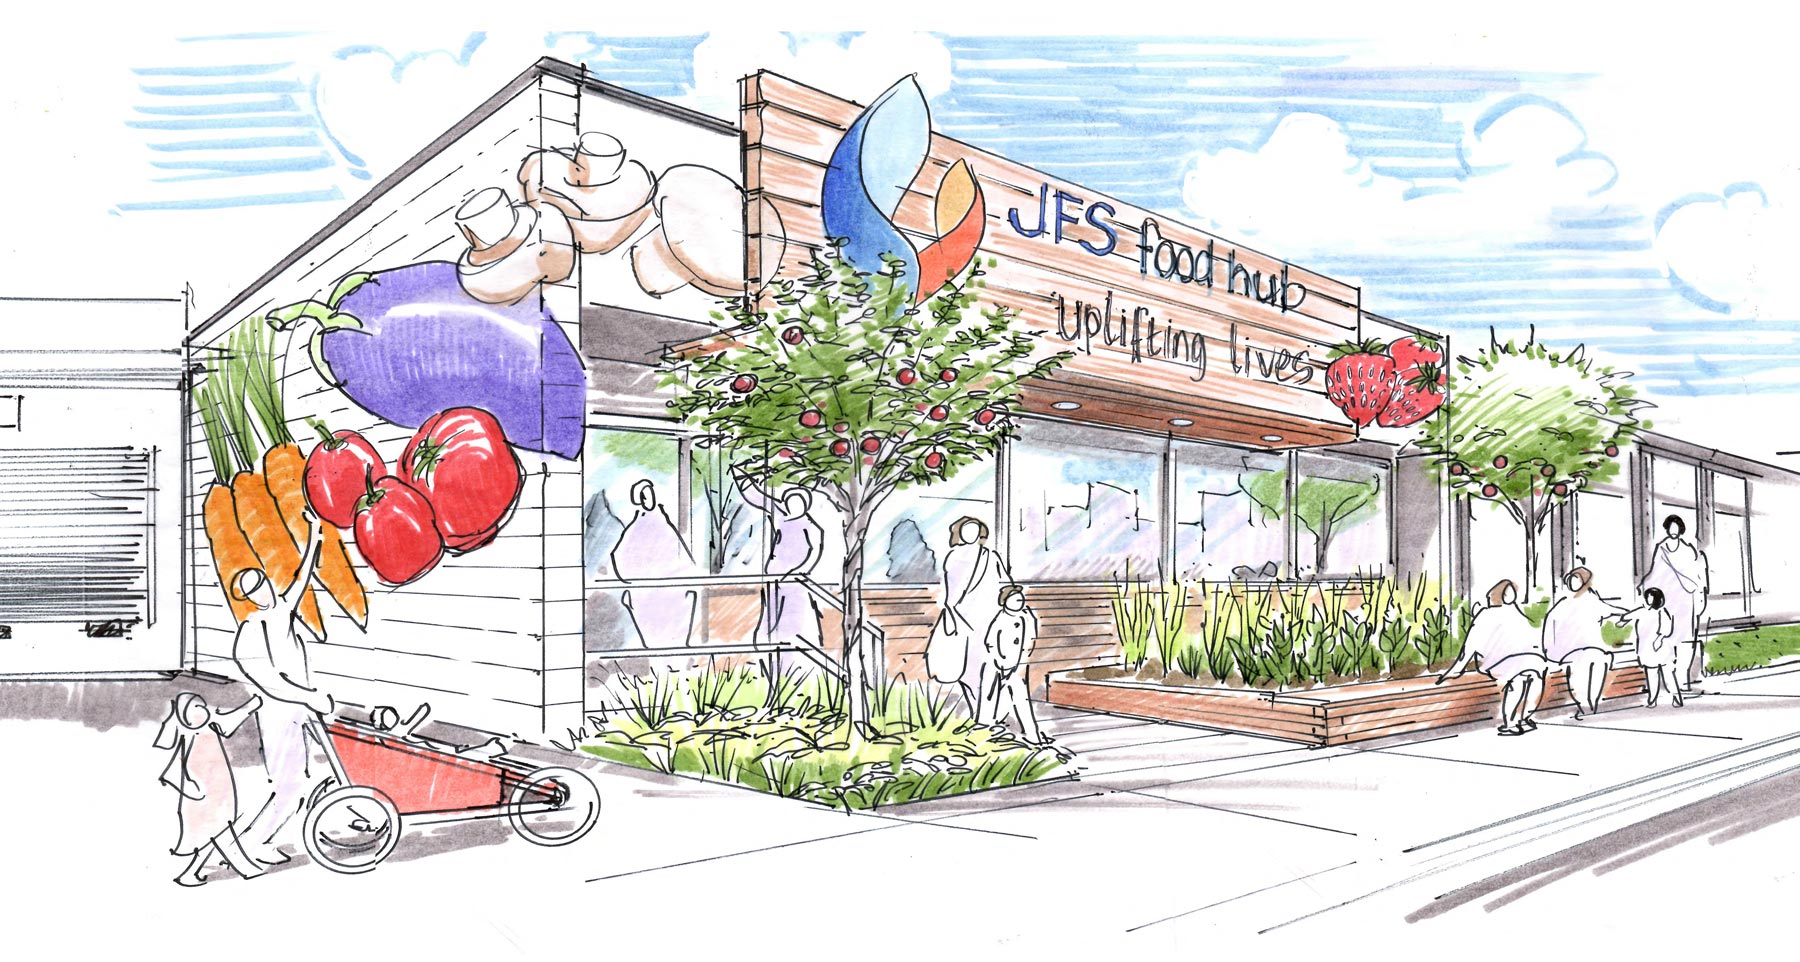 jfs food hub sketch